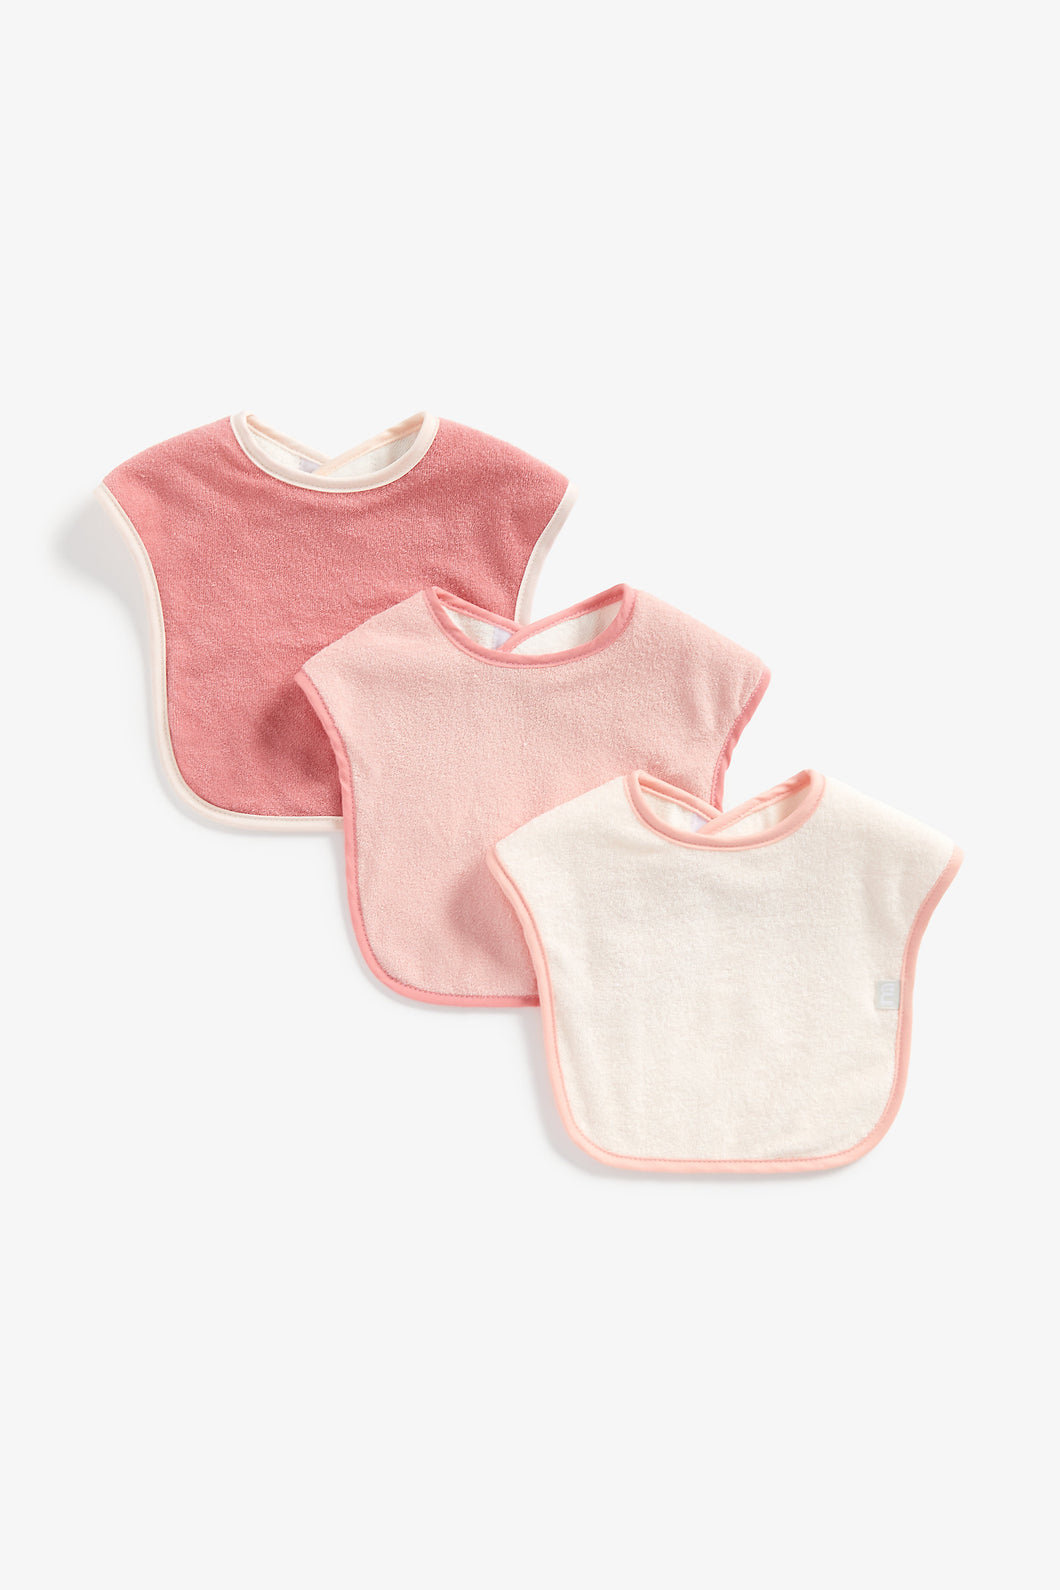 Mothercare Pink Toddler Bibs - 3 Pack